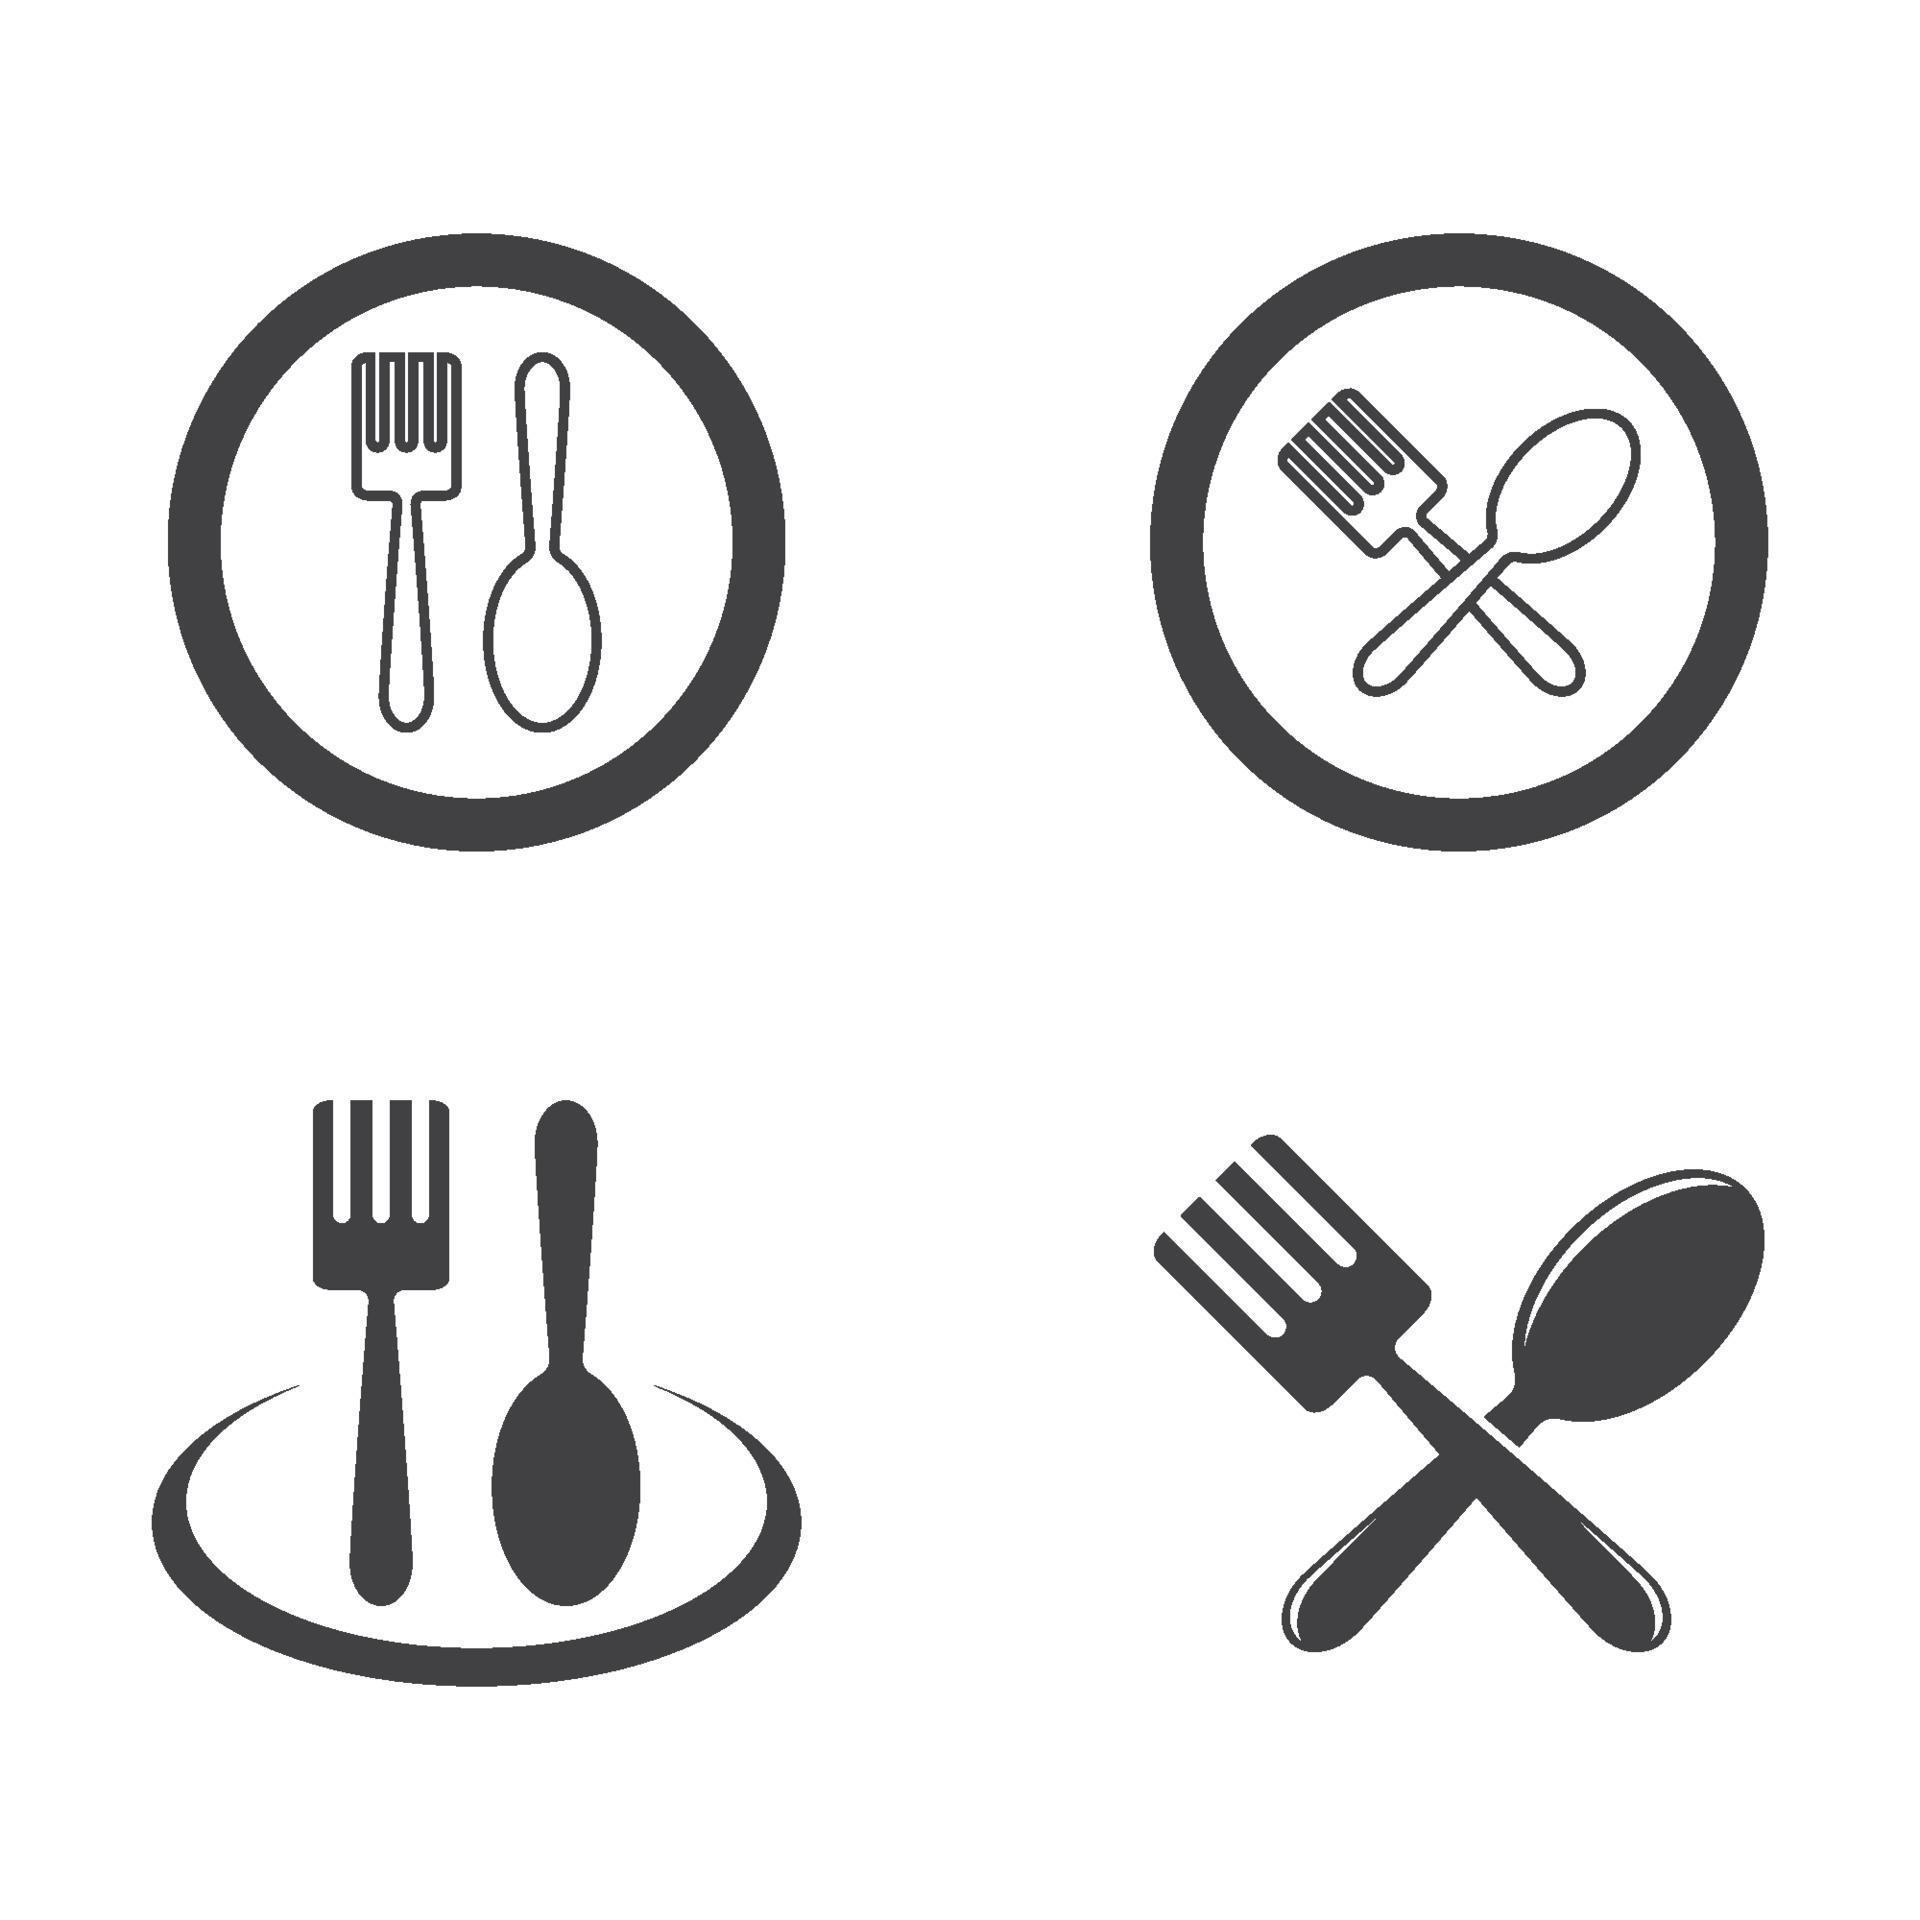 Restaurant logo image set